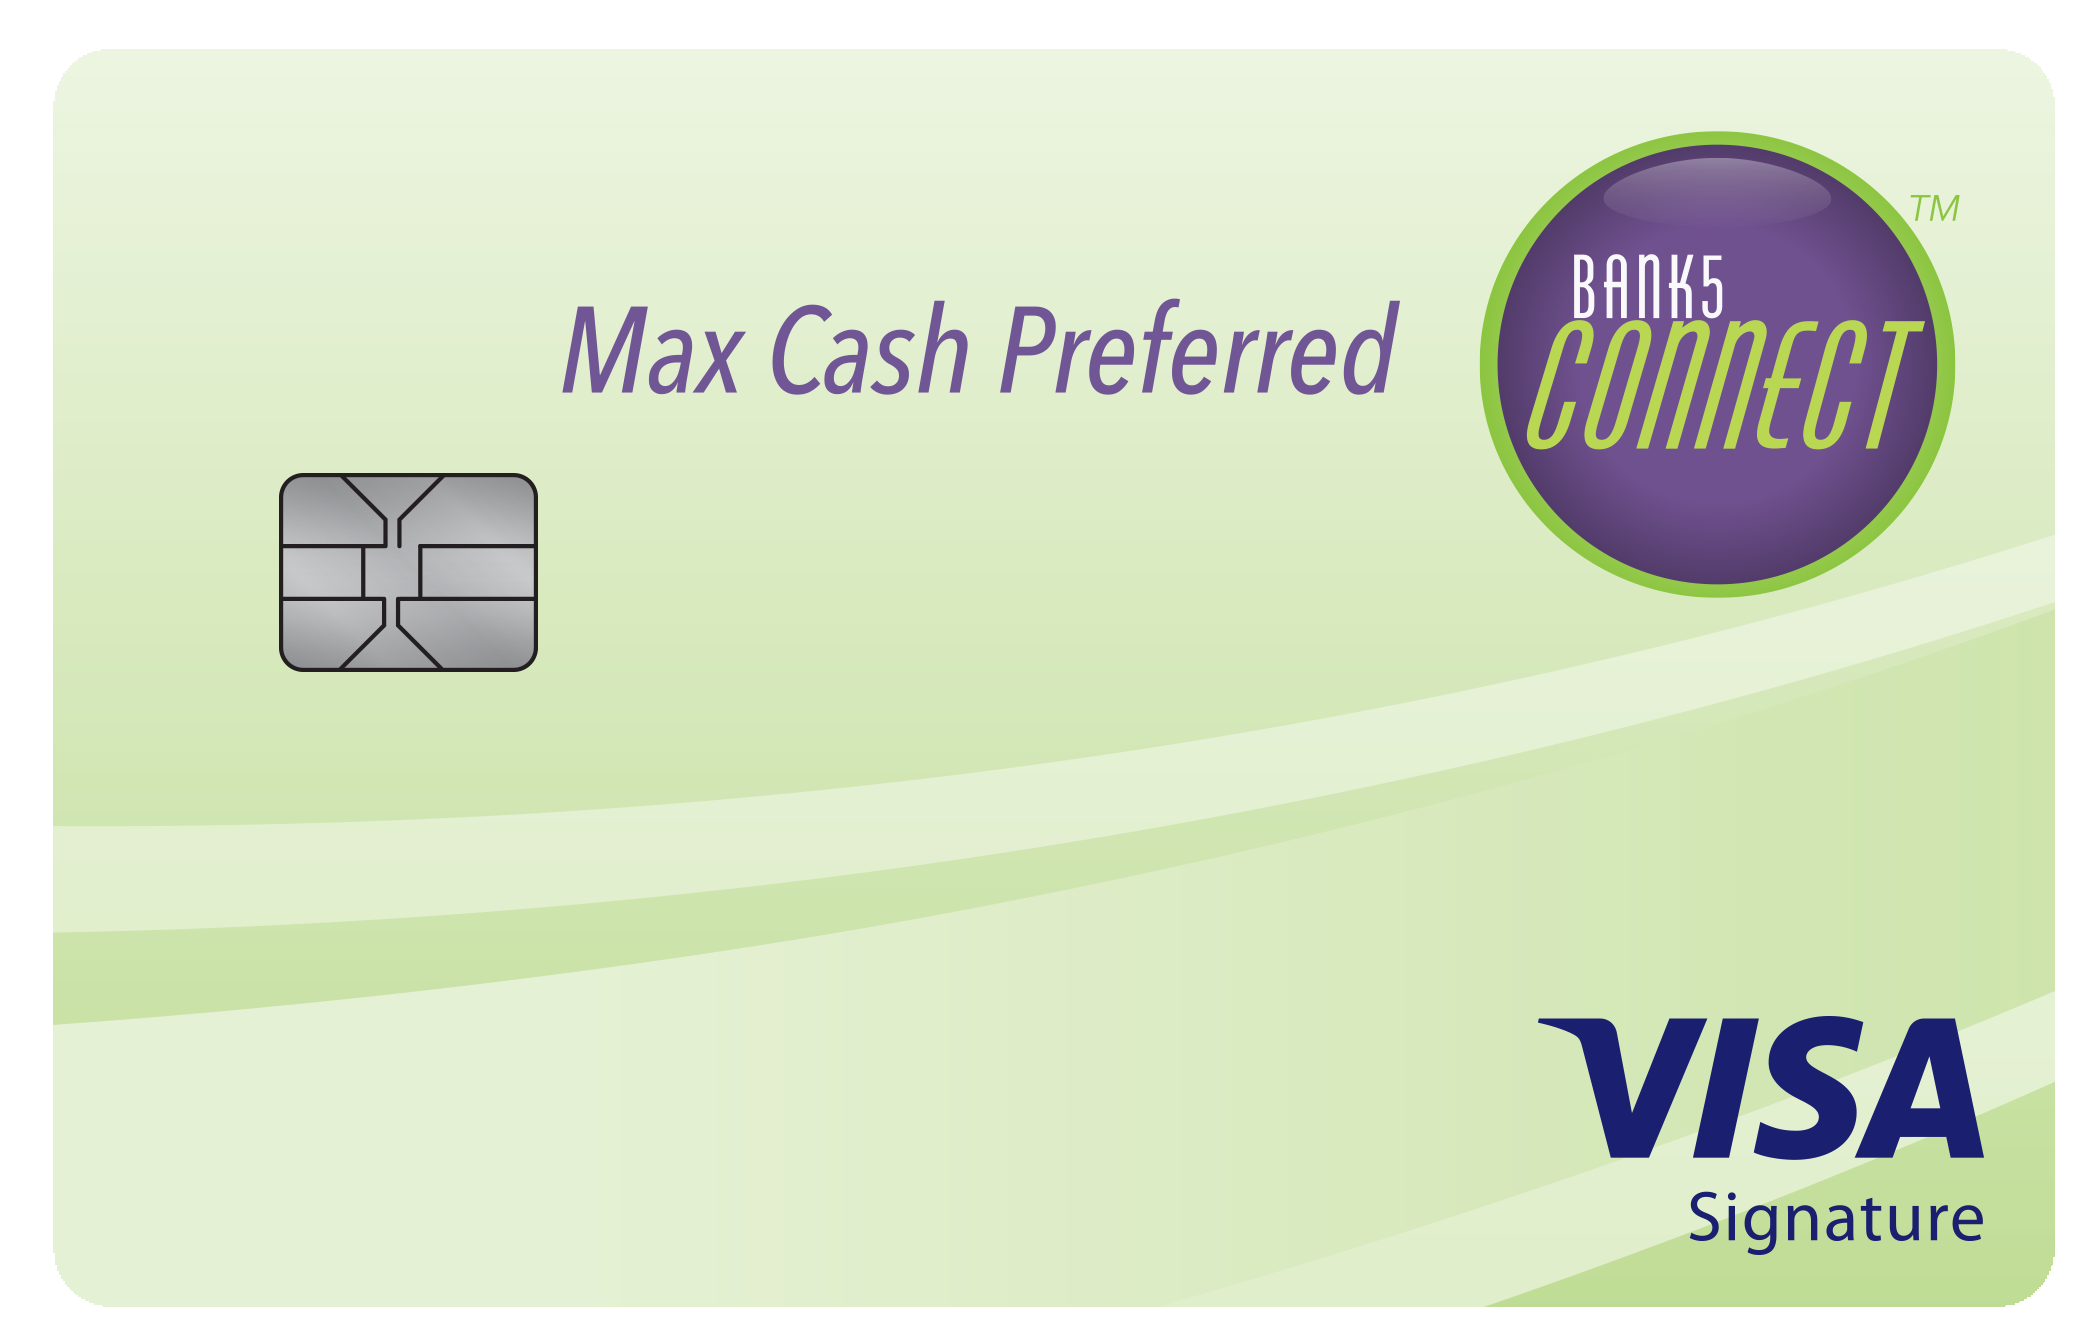 Bank5 Connect Max Cash Preferred Card